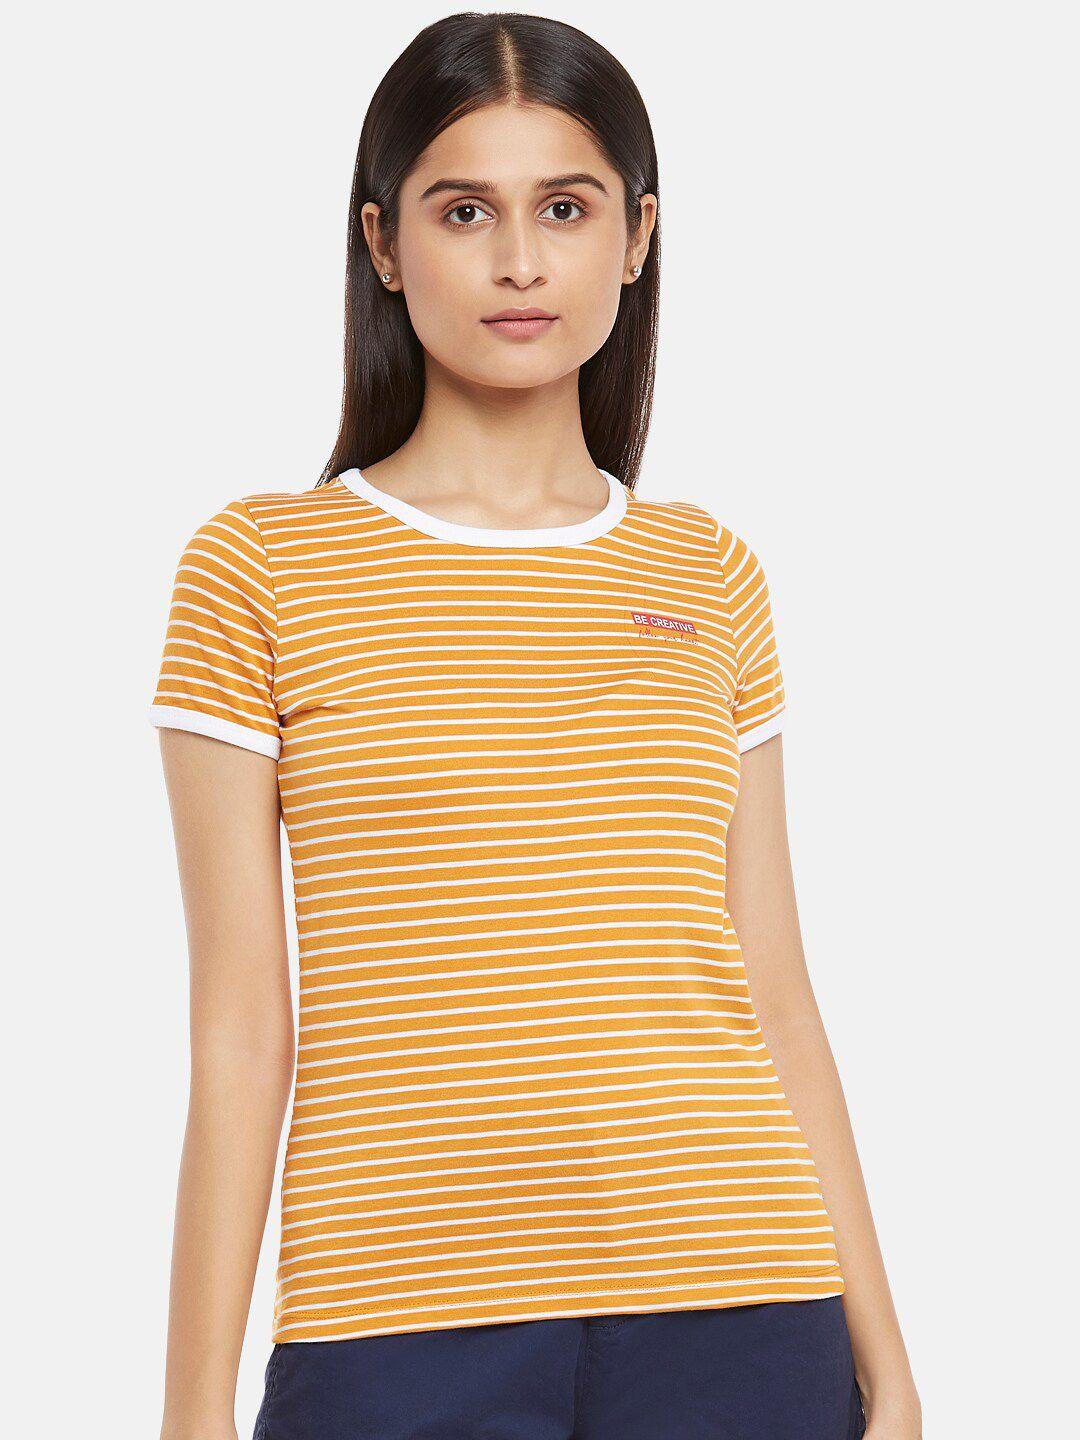 honey-by-pantaloons-women-mustard-yellow-t-shirt